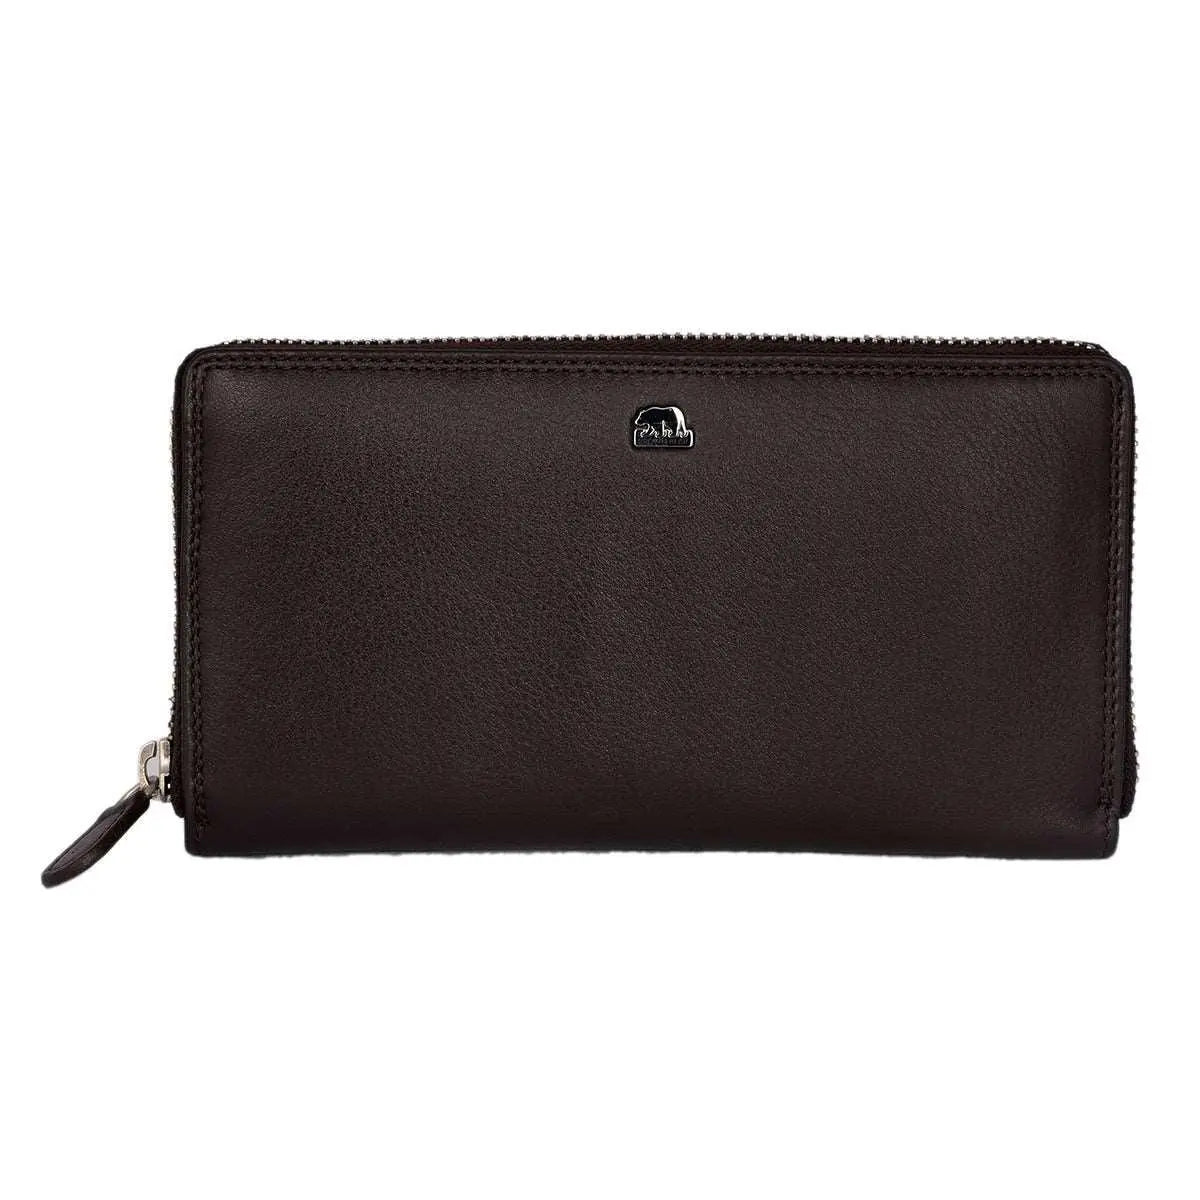 Vintage Leoni Classic Zip around Ladies Wallet in Genuine Leather - Brown Bear